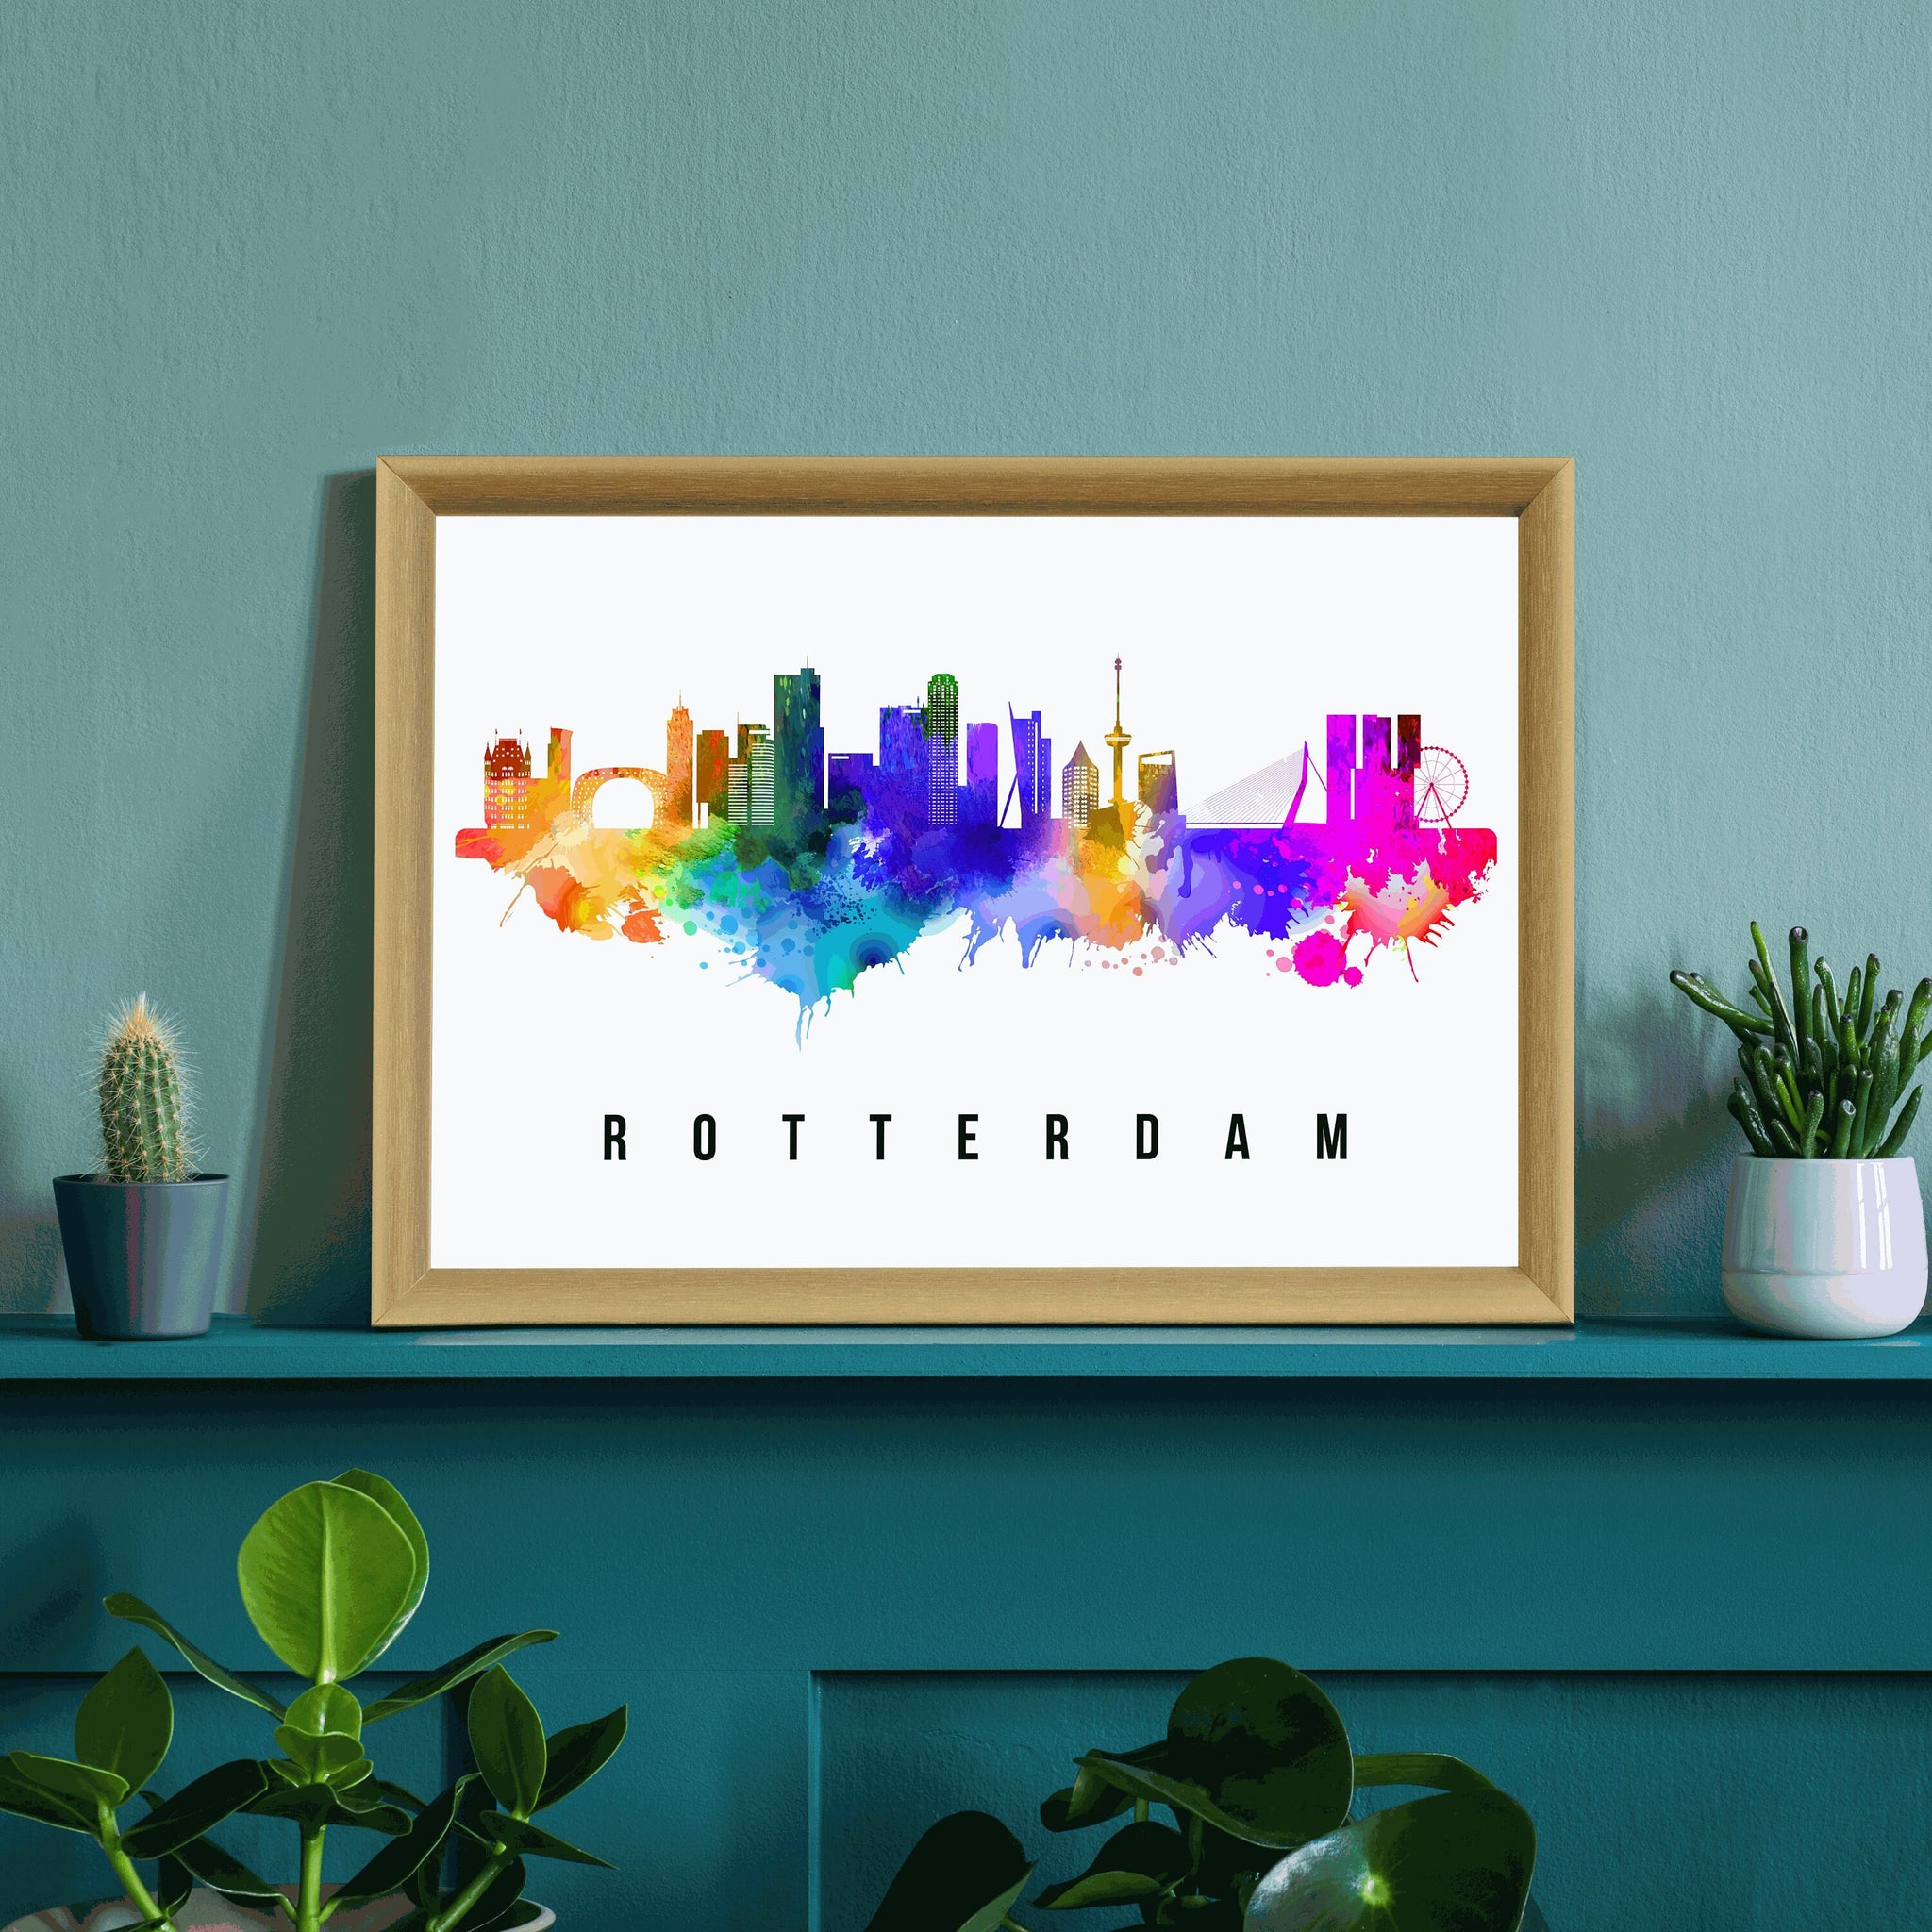 ROTTERDAM - NETHERLAND Poster, Skyline Poster Cityscape and Landmark Rotterdam Illustration Home Wall Art, Office Decor